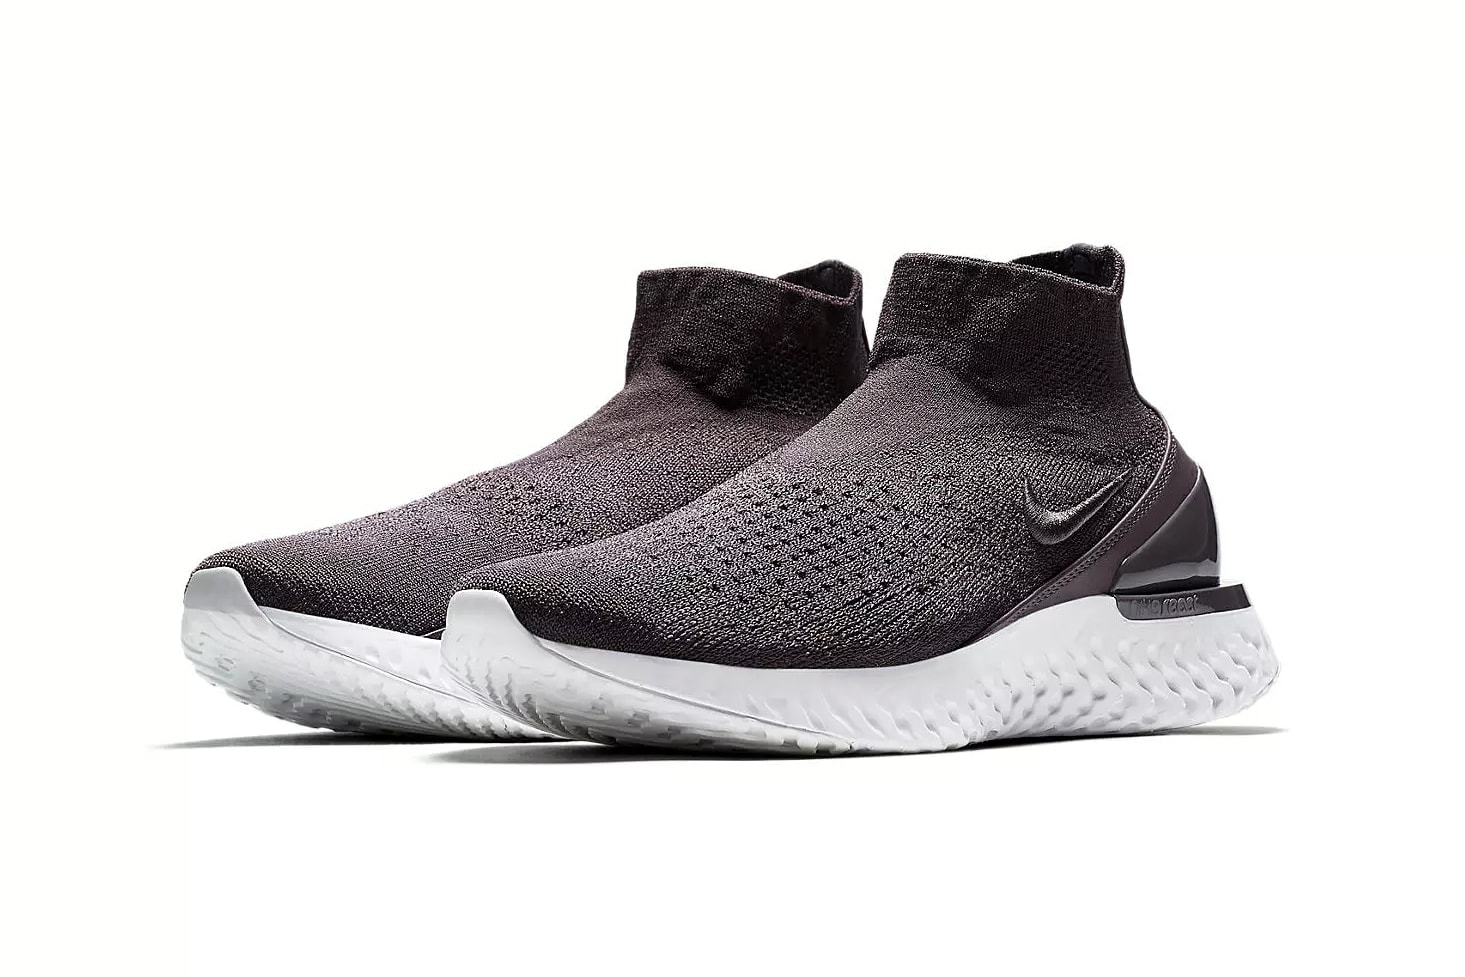 Nike Rise React Flyknit Shoe Details Cop Purchase Buy Shoes Trainers Kicks Sneakers Footwear